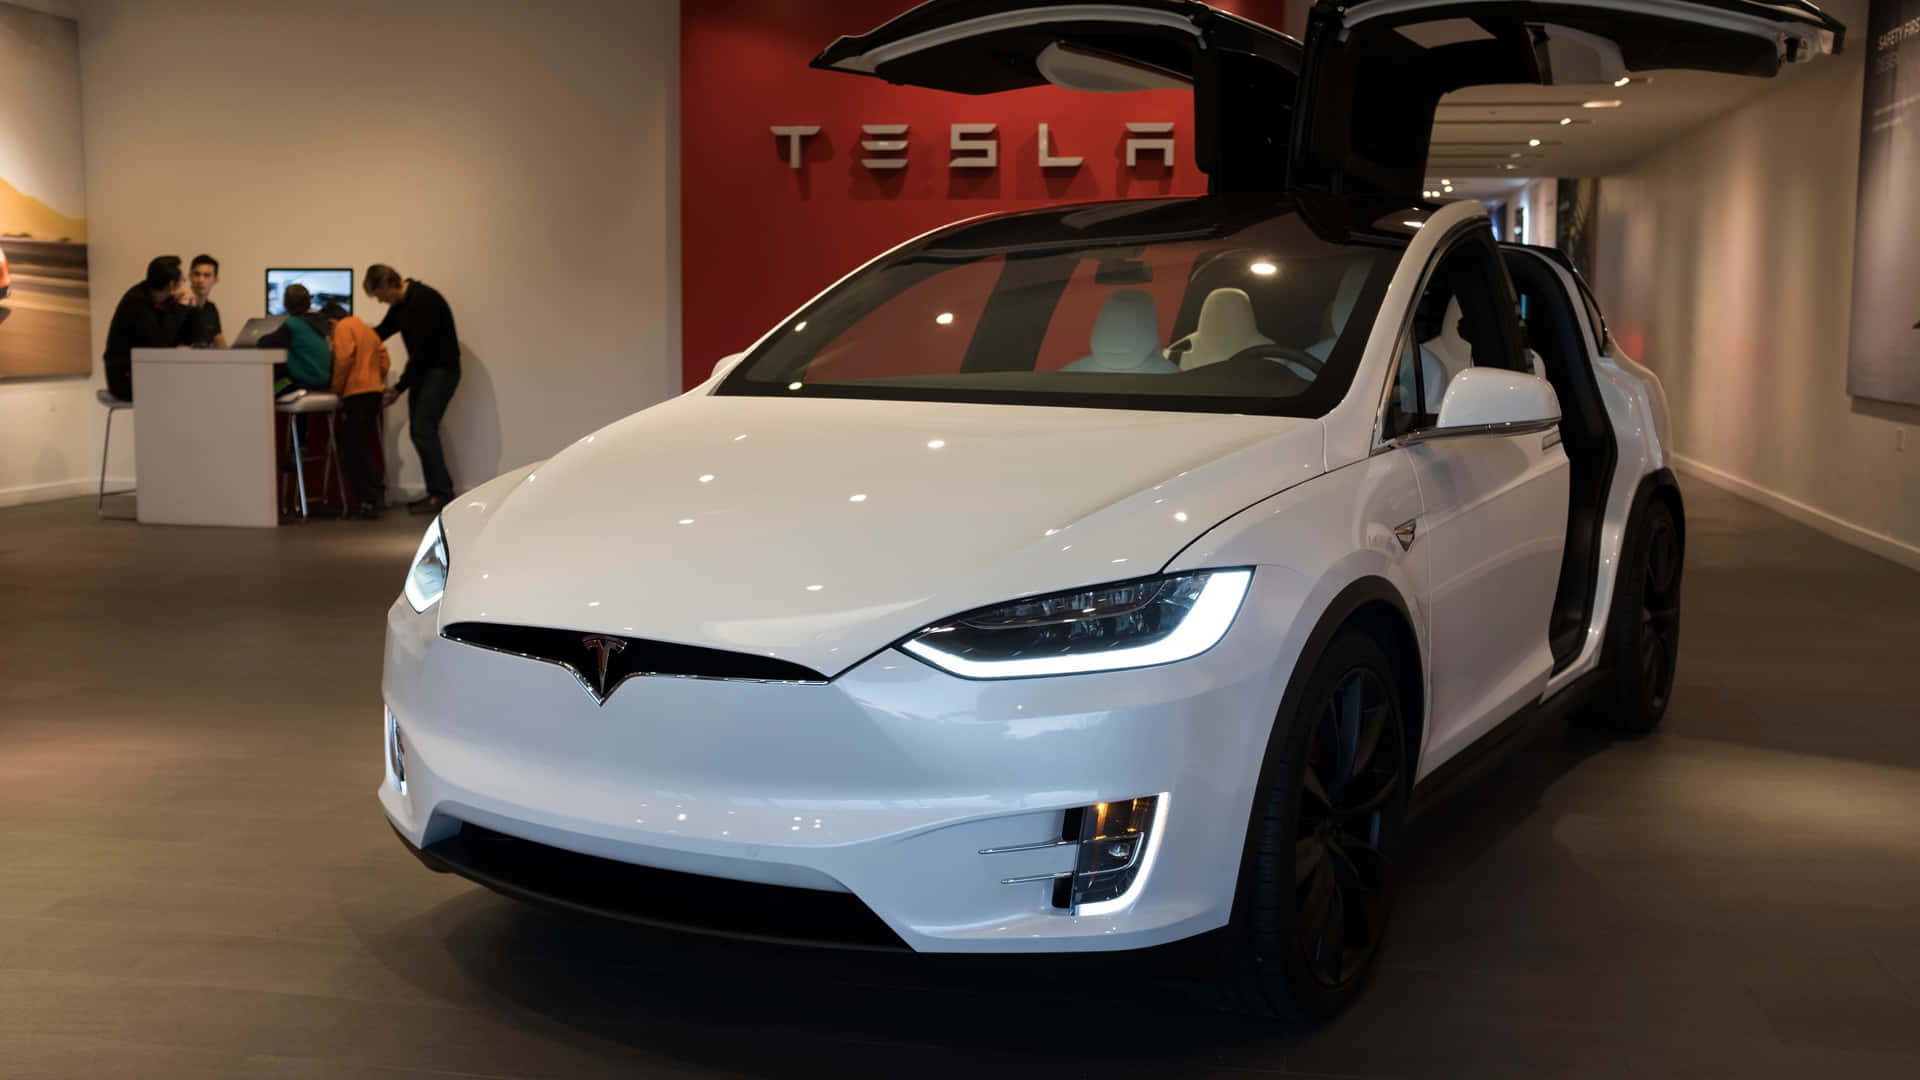 Caption: Vibrant Display of Tesla's Innovative Design